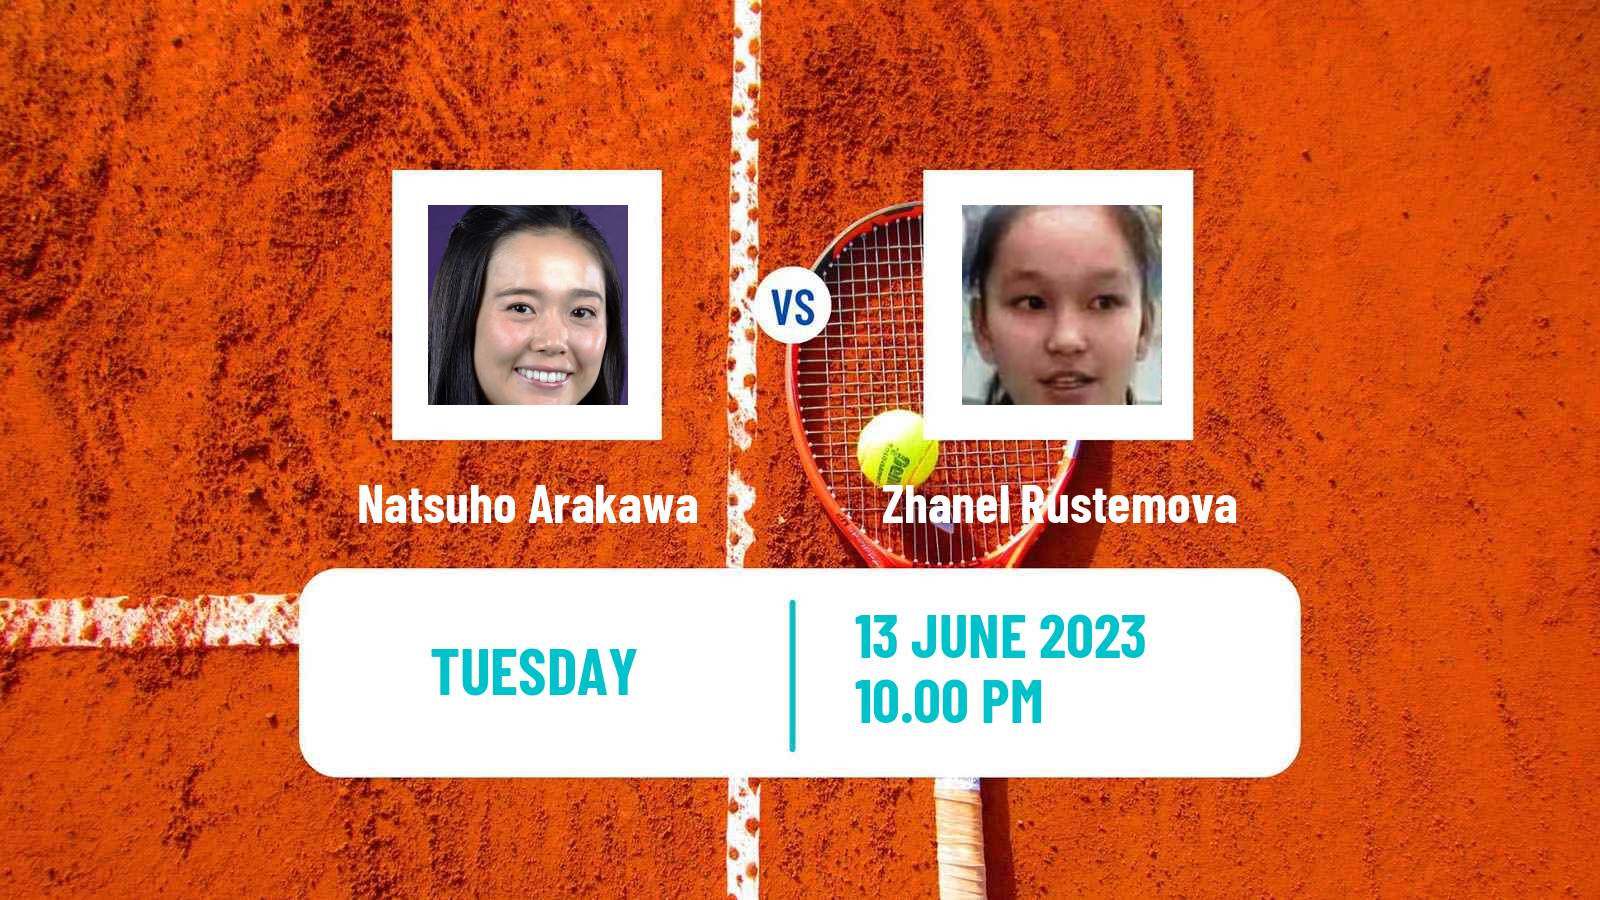 Tennis ITF W15 Nakhon Si Thammarat 2 Women Natsuho Arakawa - Zhanel Rustemova